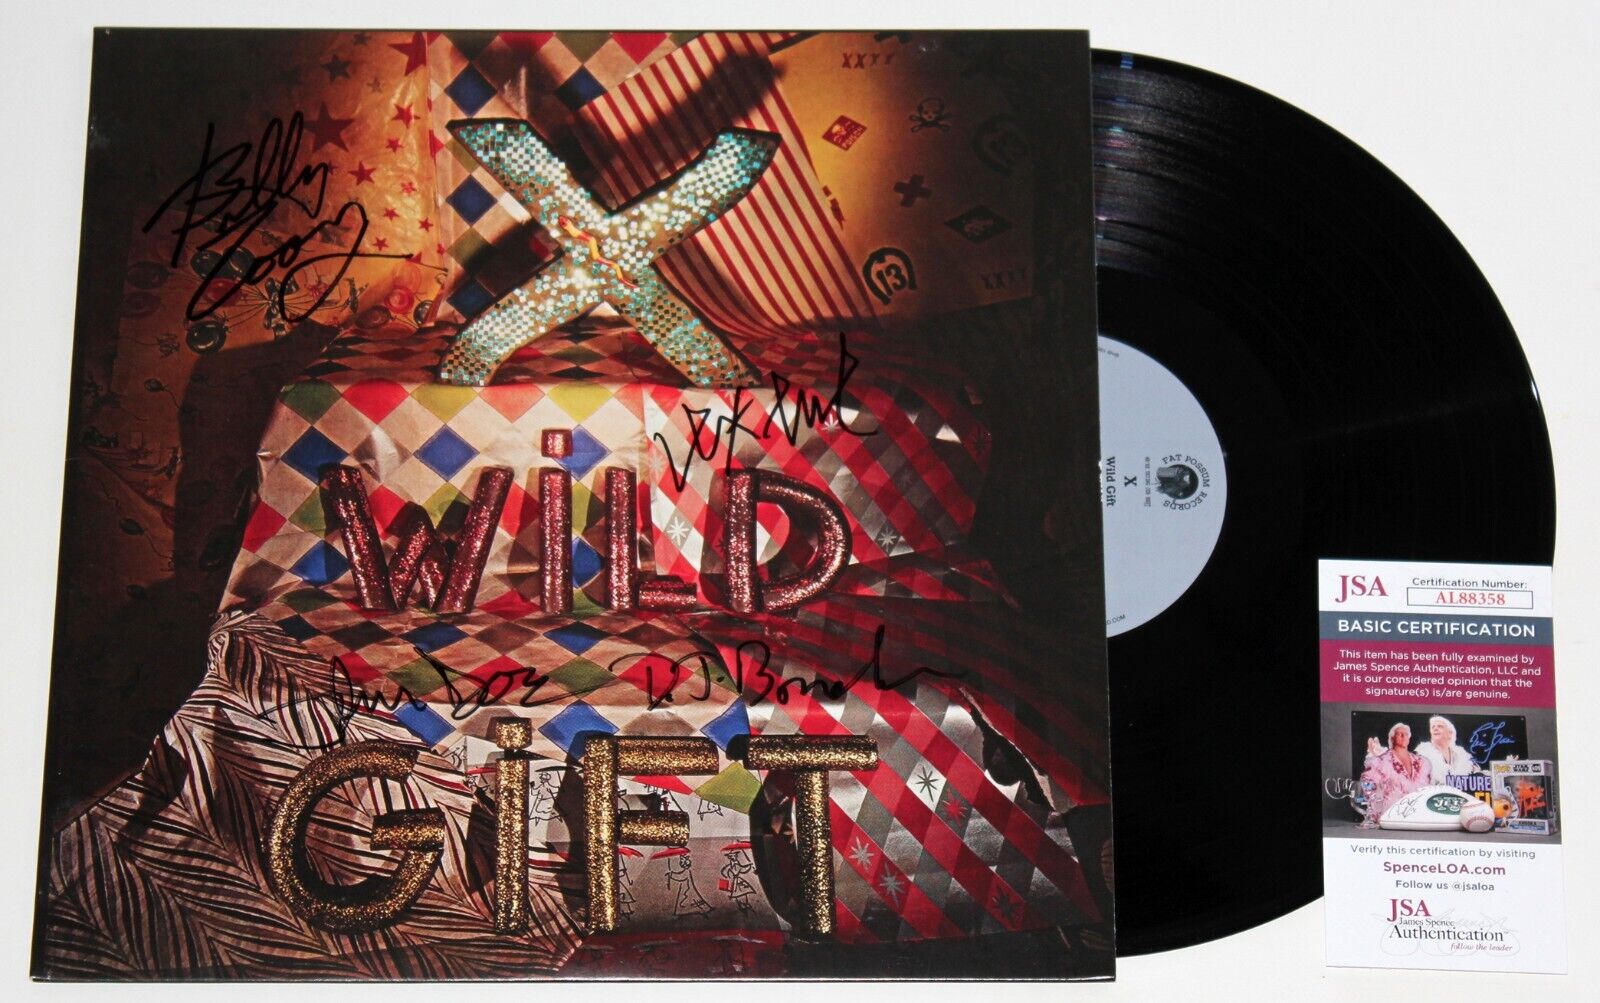 X BAND SIGNED WILD GIFT VINYL RECORD ALBUM LOS ANGELES RARE AUTOGRAPHED +JSA COA